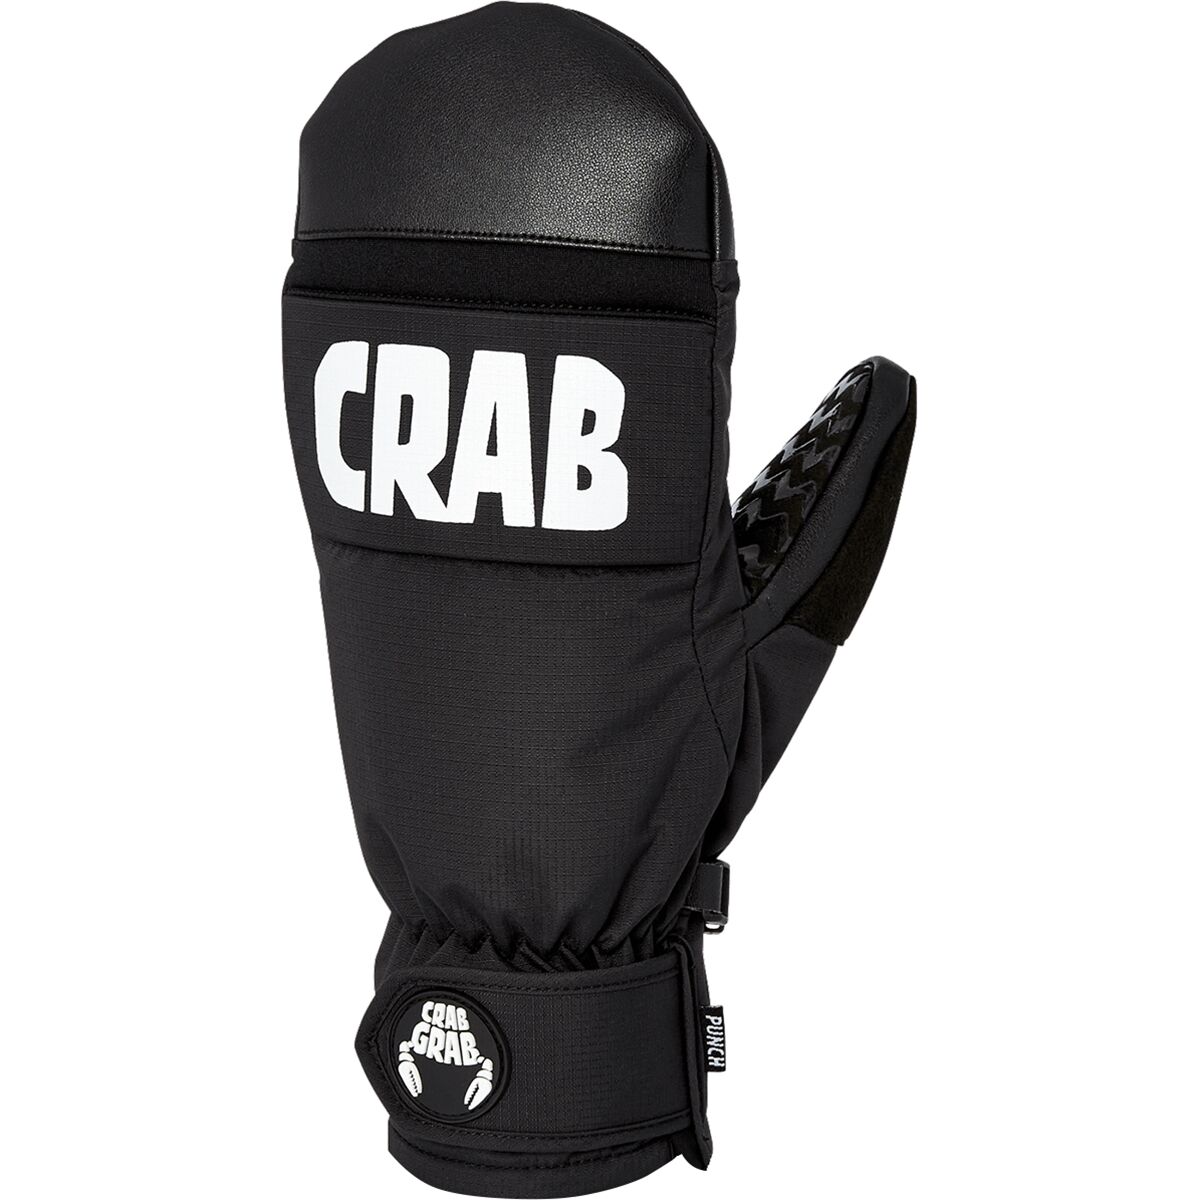 Crab Grab Punch Mitten - Men's